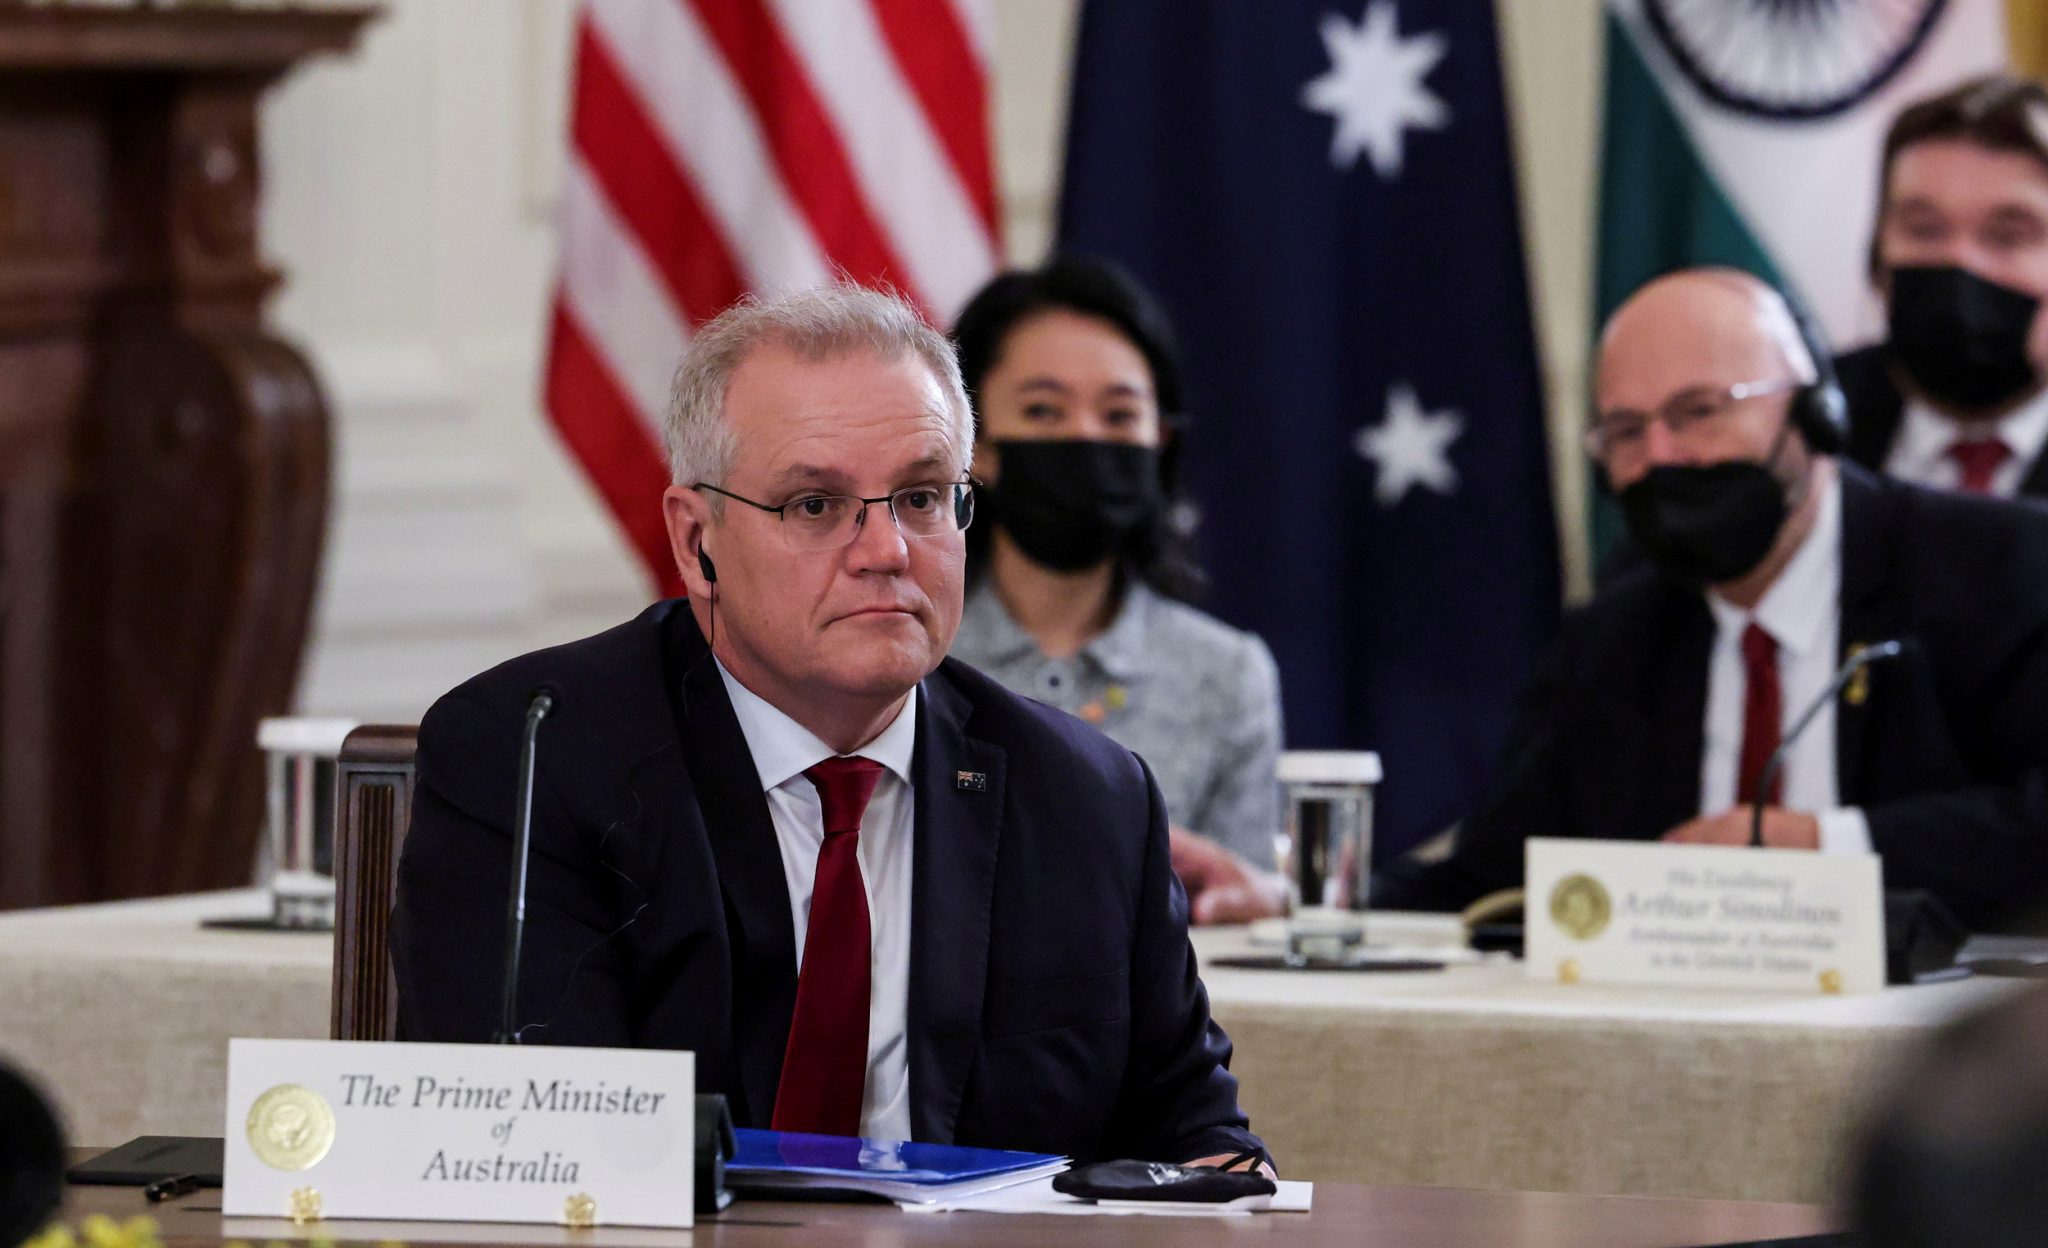 Australia's Prime Minister Scott Morrison at an event at the White House in Washington, D.C. on September 24, 2021. He has announced slight relaxation of some travel bans to Australia. 